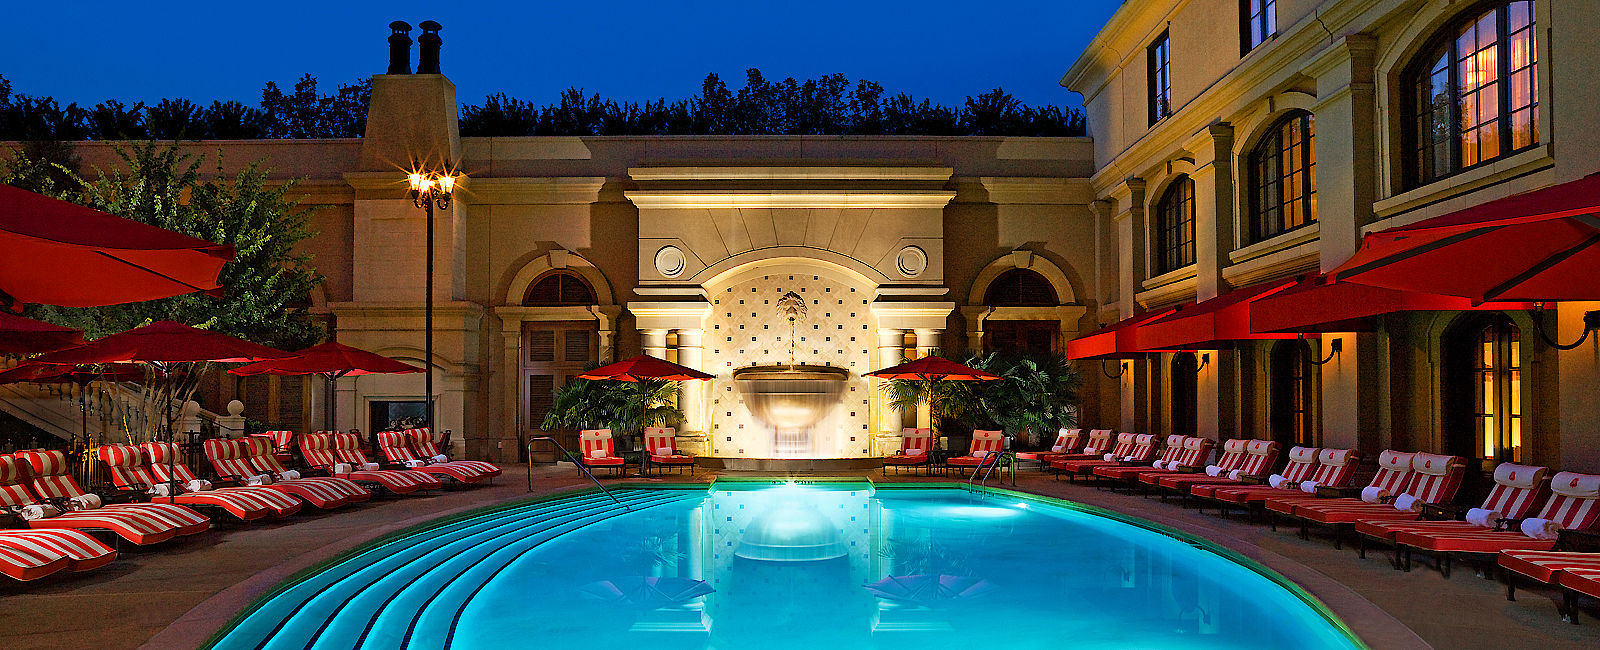 HOTEL TIPPS
 The St. Regis Atlanta Hotel & Residences 
 Luxus Palast mit großem Wellness Angebot 